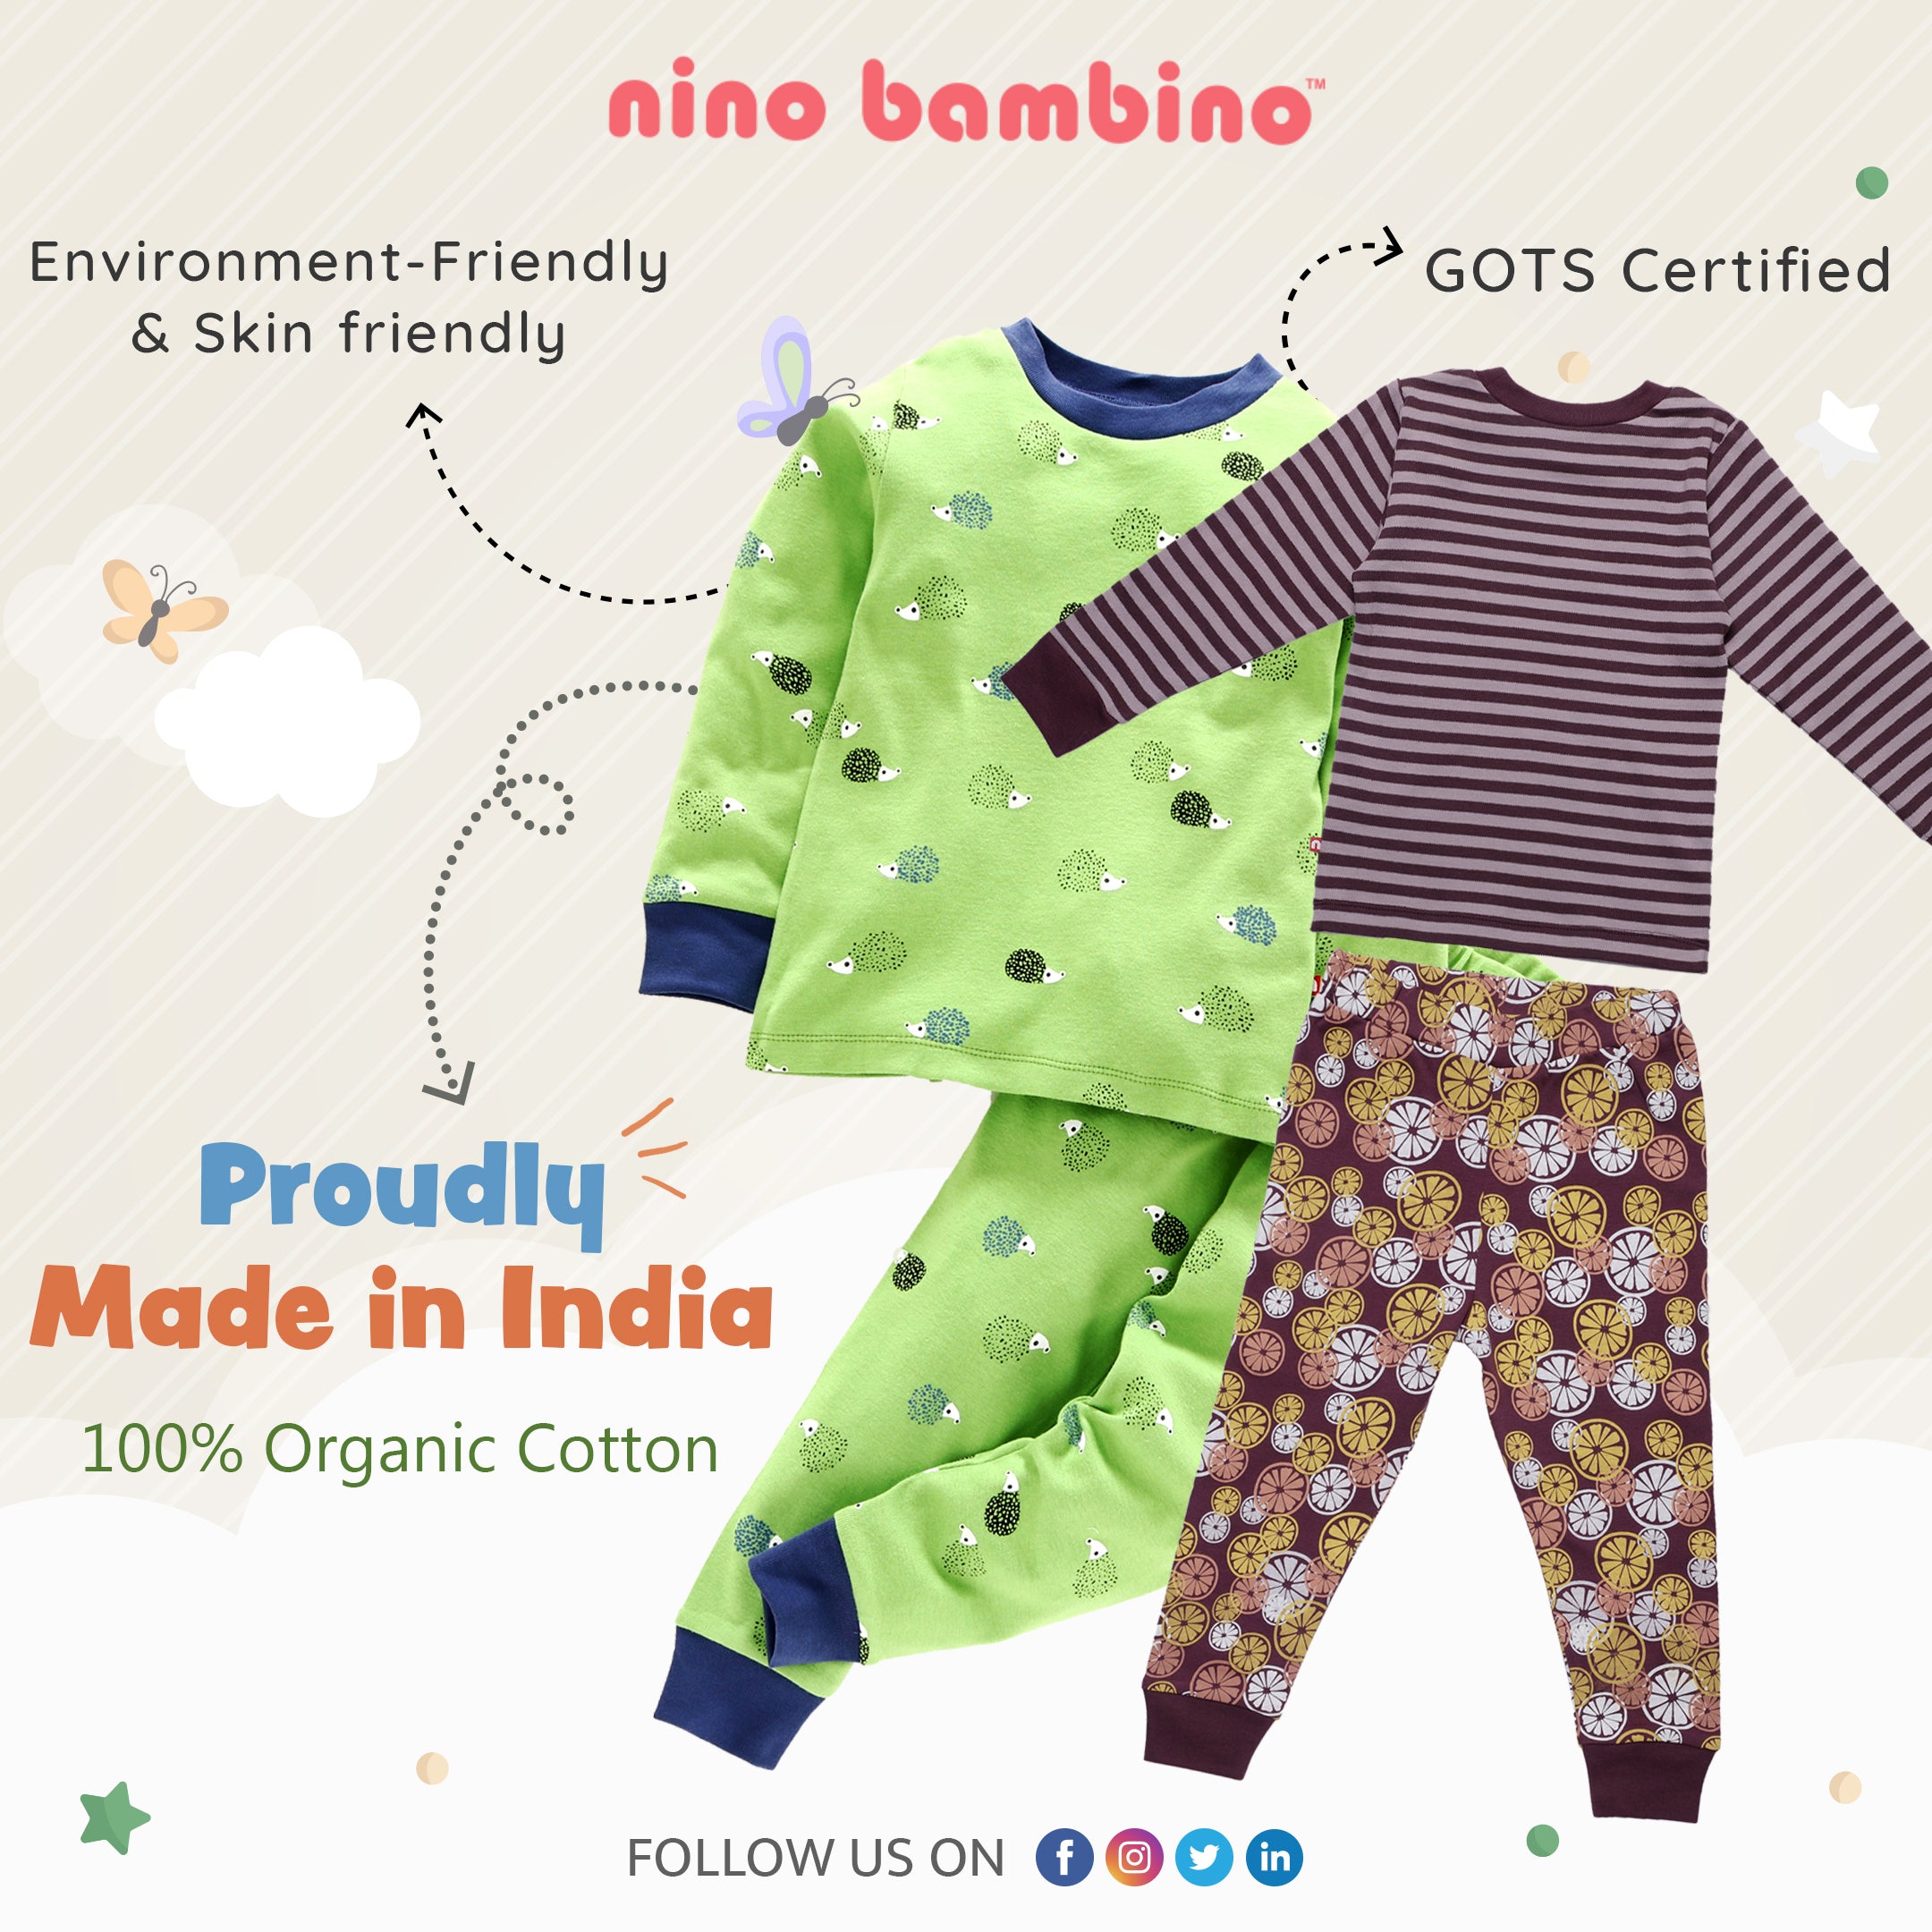 Leading Organic Clothing Brand – Nino Bambino